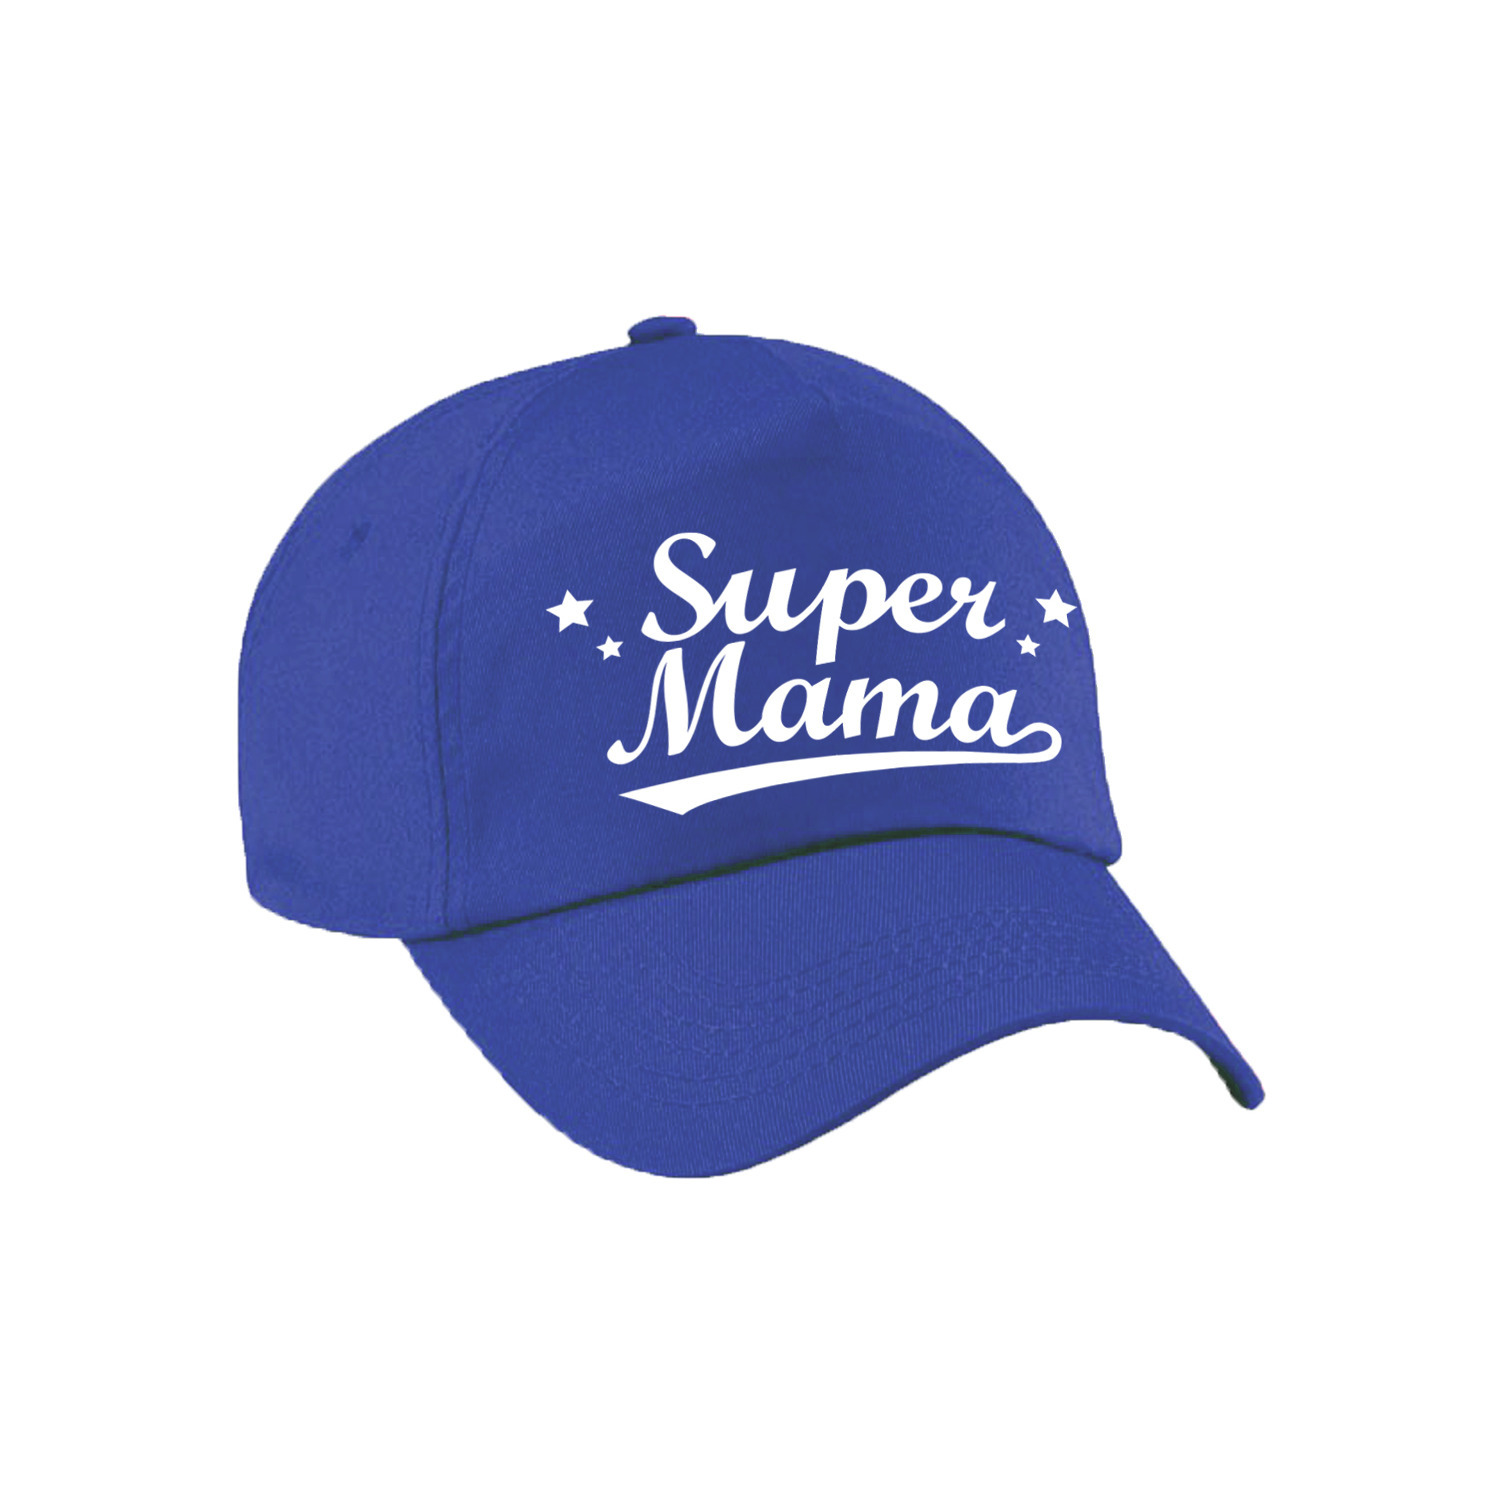 Super mama moederdag cadeau pet -cap blauw voor dames